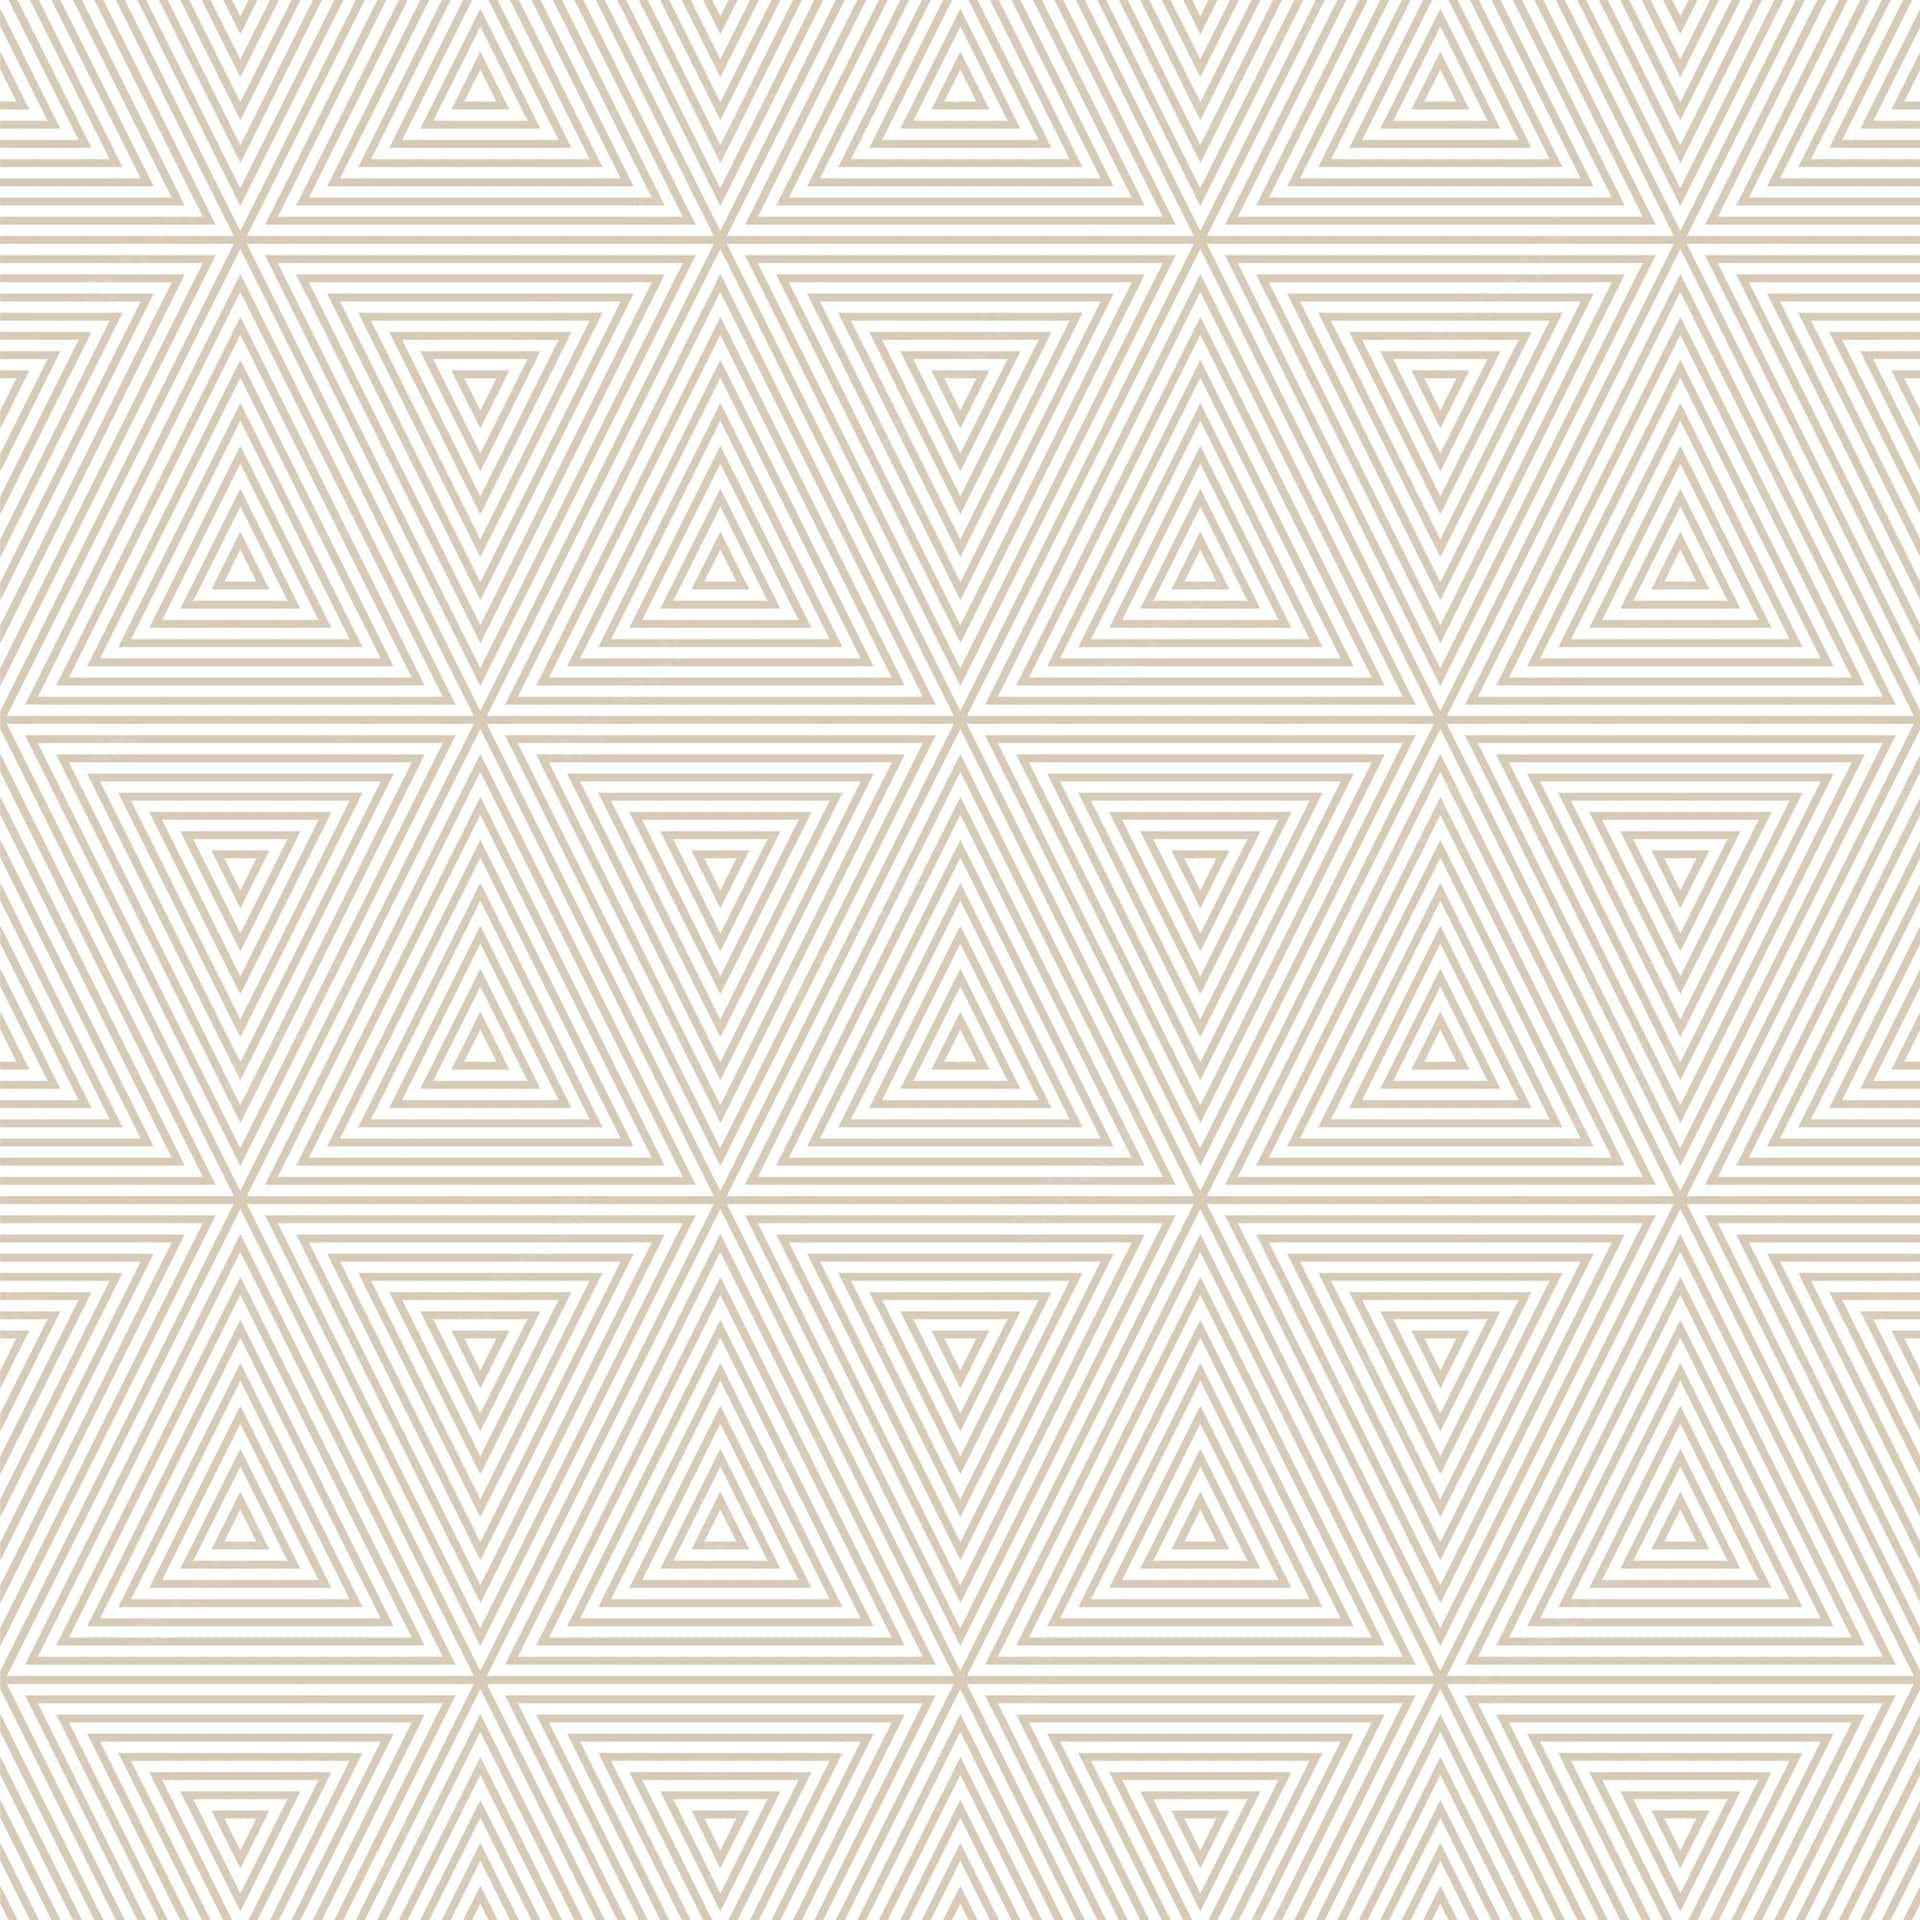 Repetitive Line Pattern [wallpaper] Wallpaper